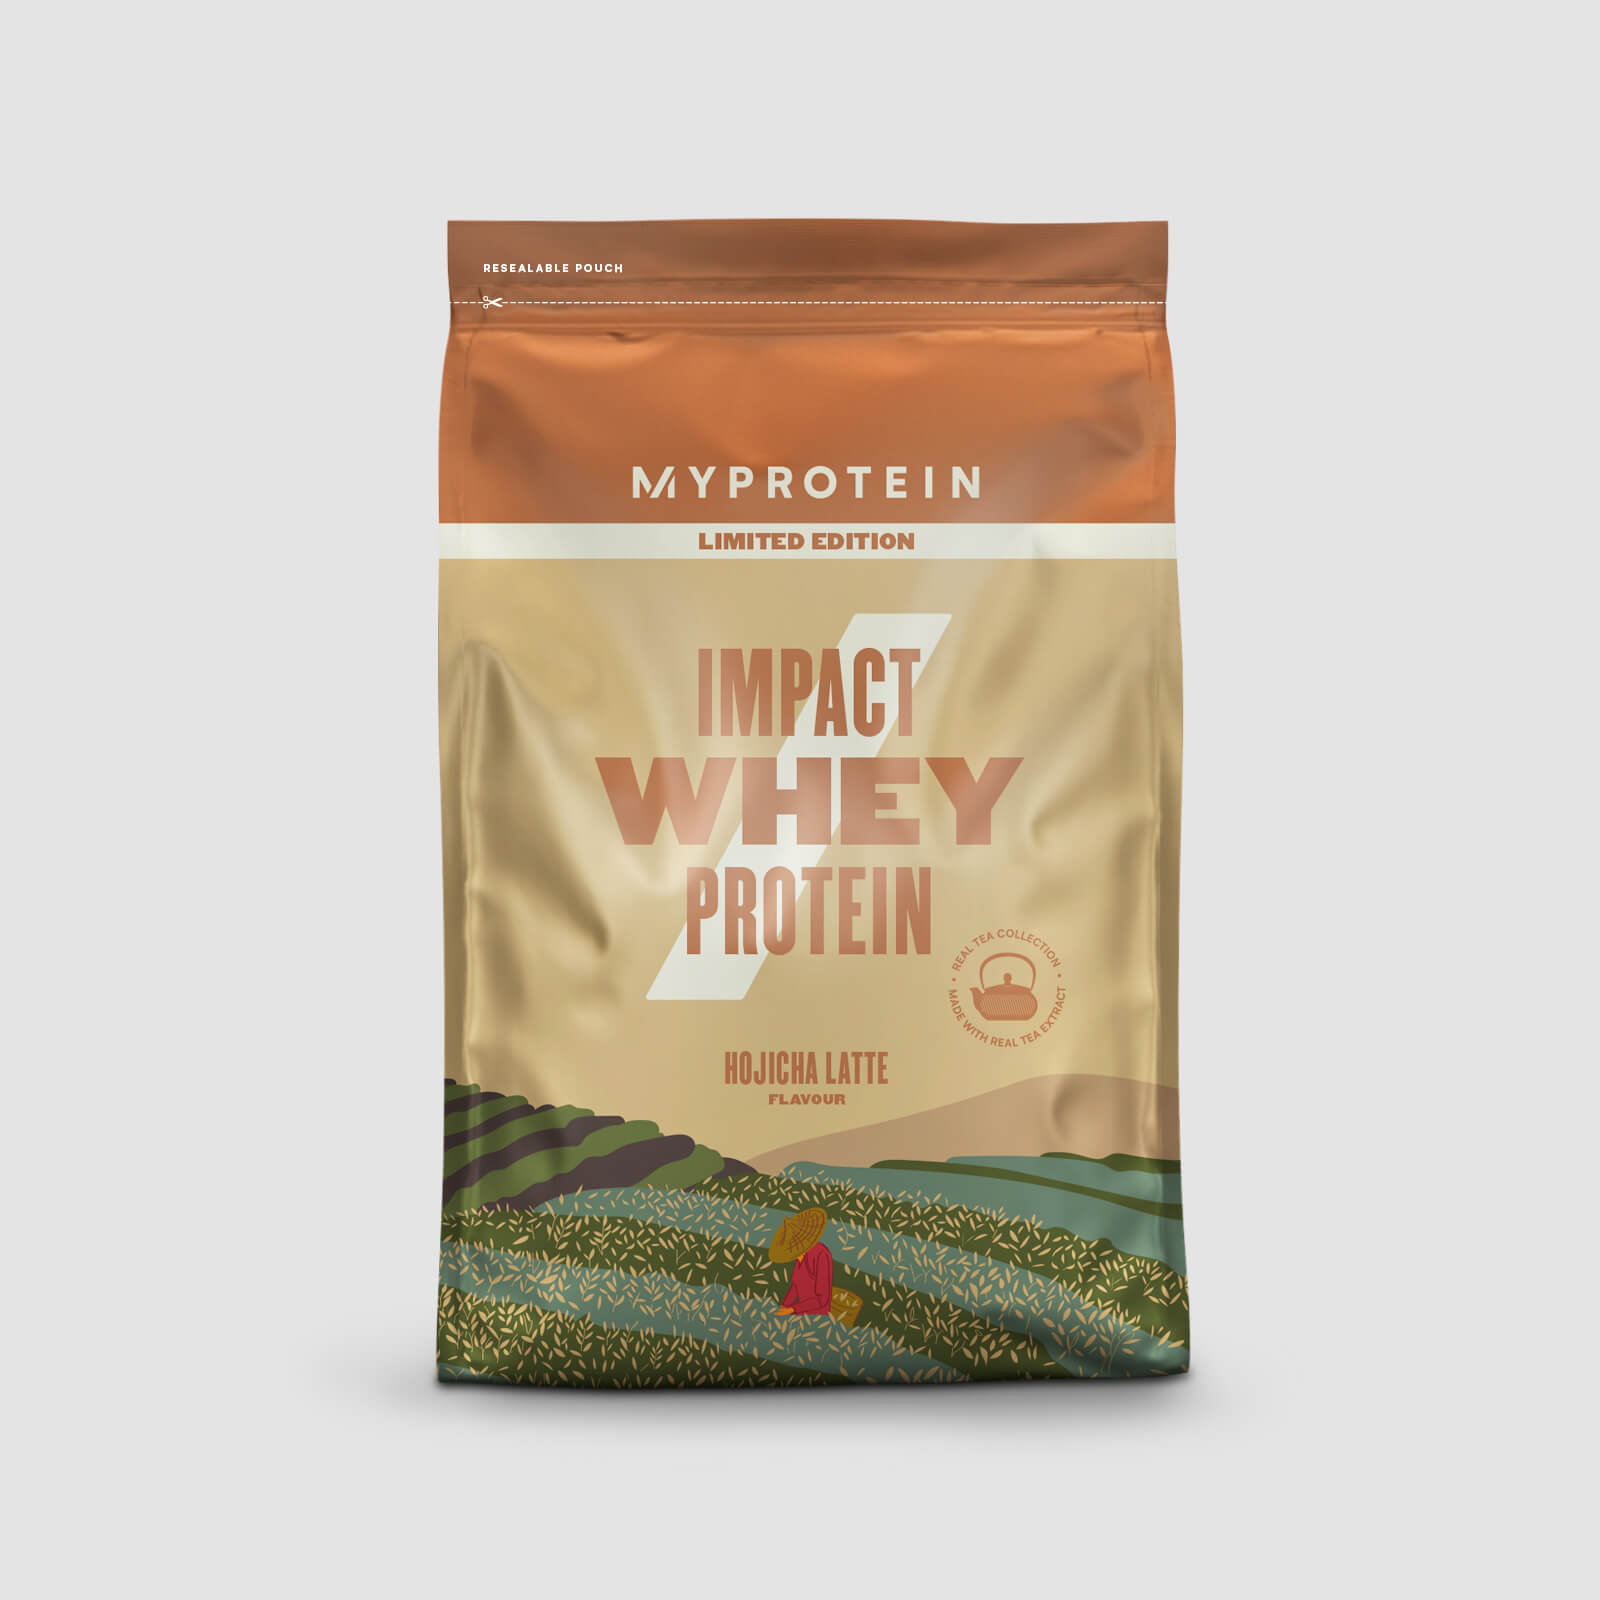 Сывороточный протеин (Impact Whey Protein) - 1kg - Hojicha